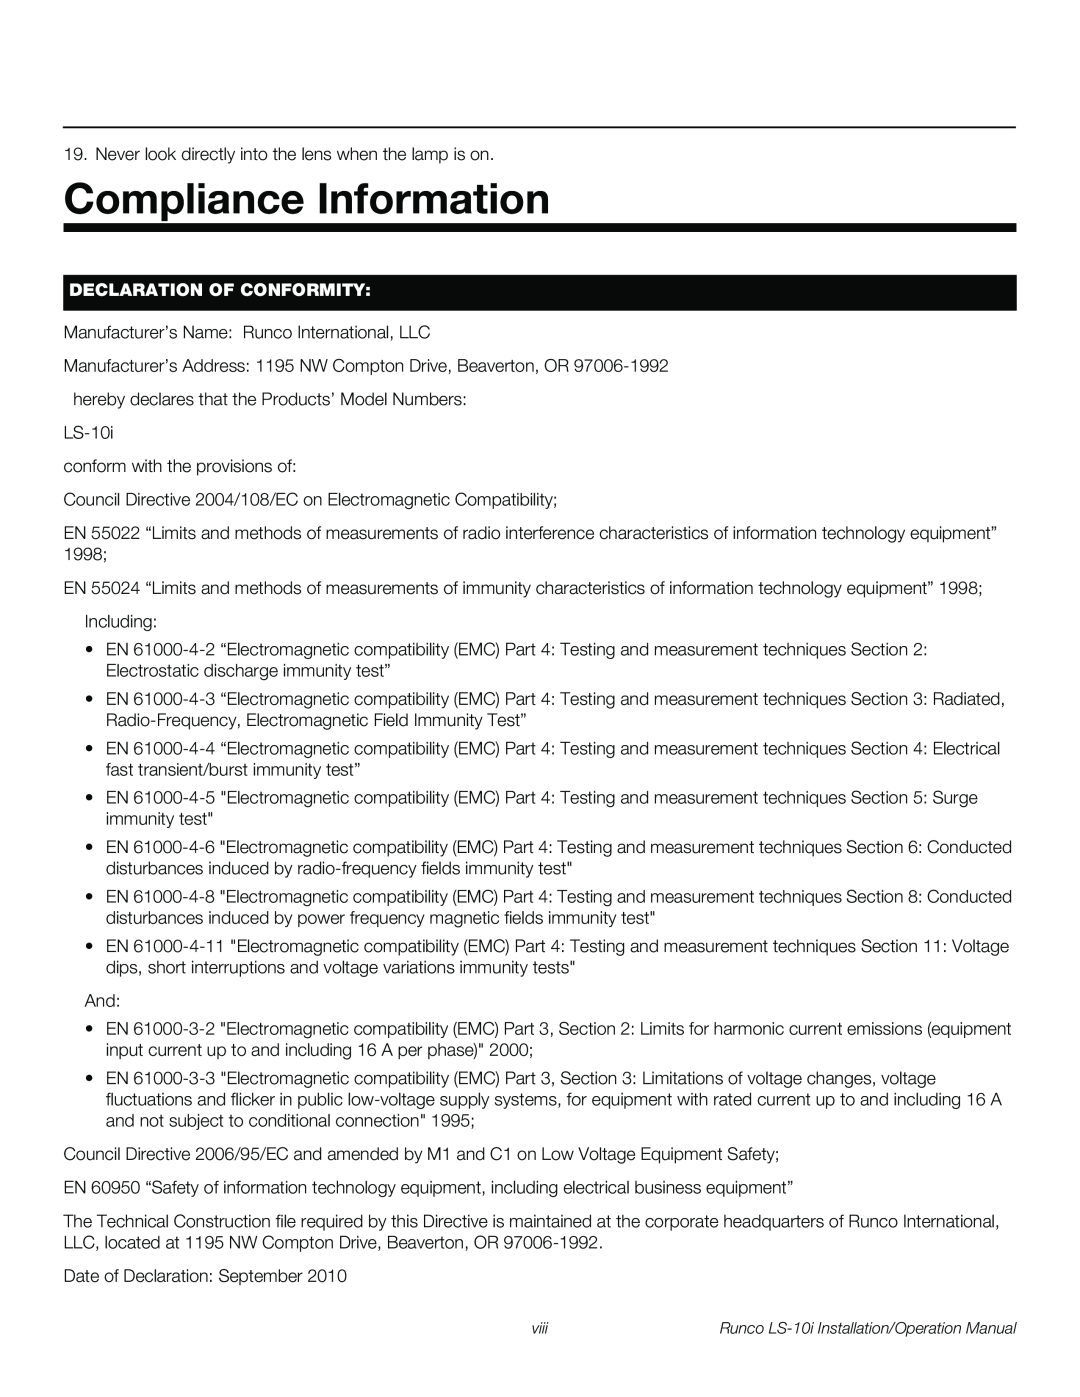 Runco LS-10I operation manual Compliance Information, Declaration Of Conformity 